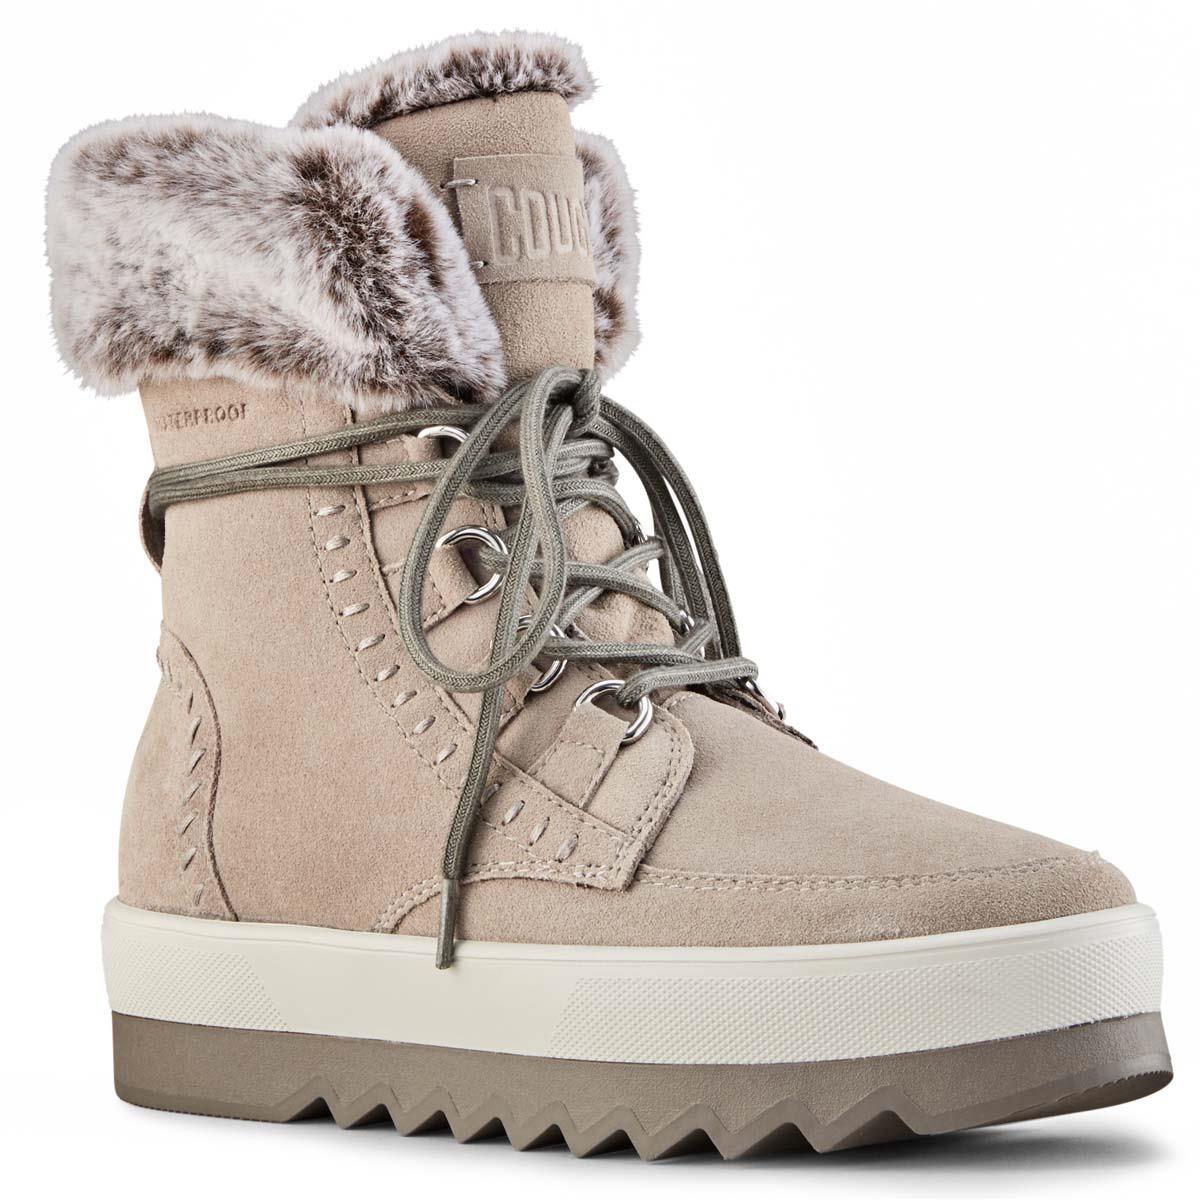 slip on winter boots womens